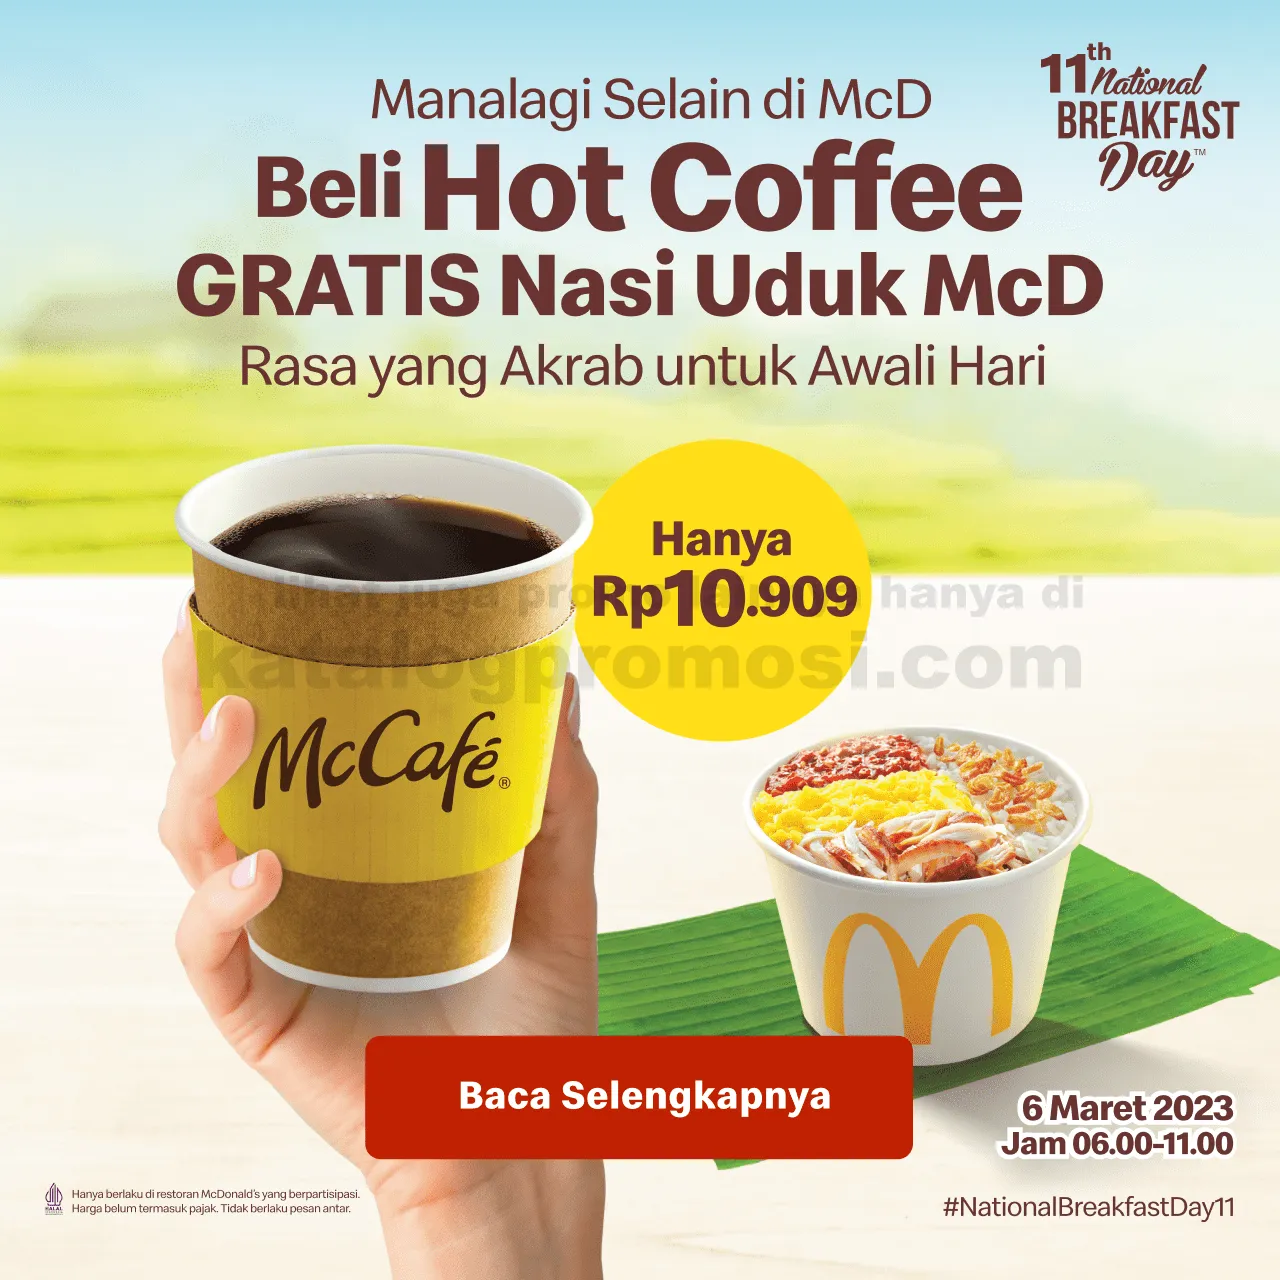 Promo MCDONALDS National Breakfast Day - BELI HOT COFFEE GRATIS NASI UDUK MCD